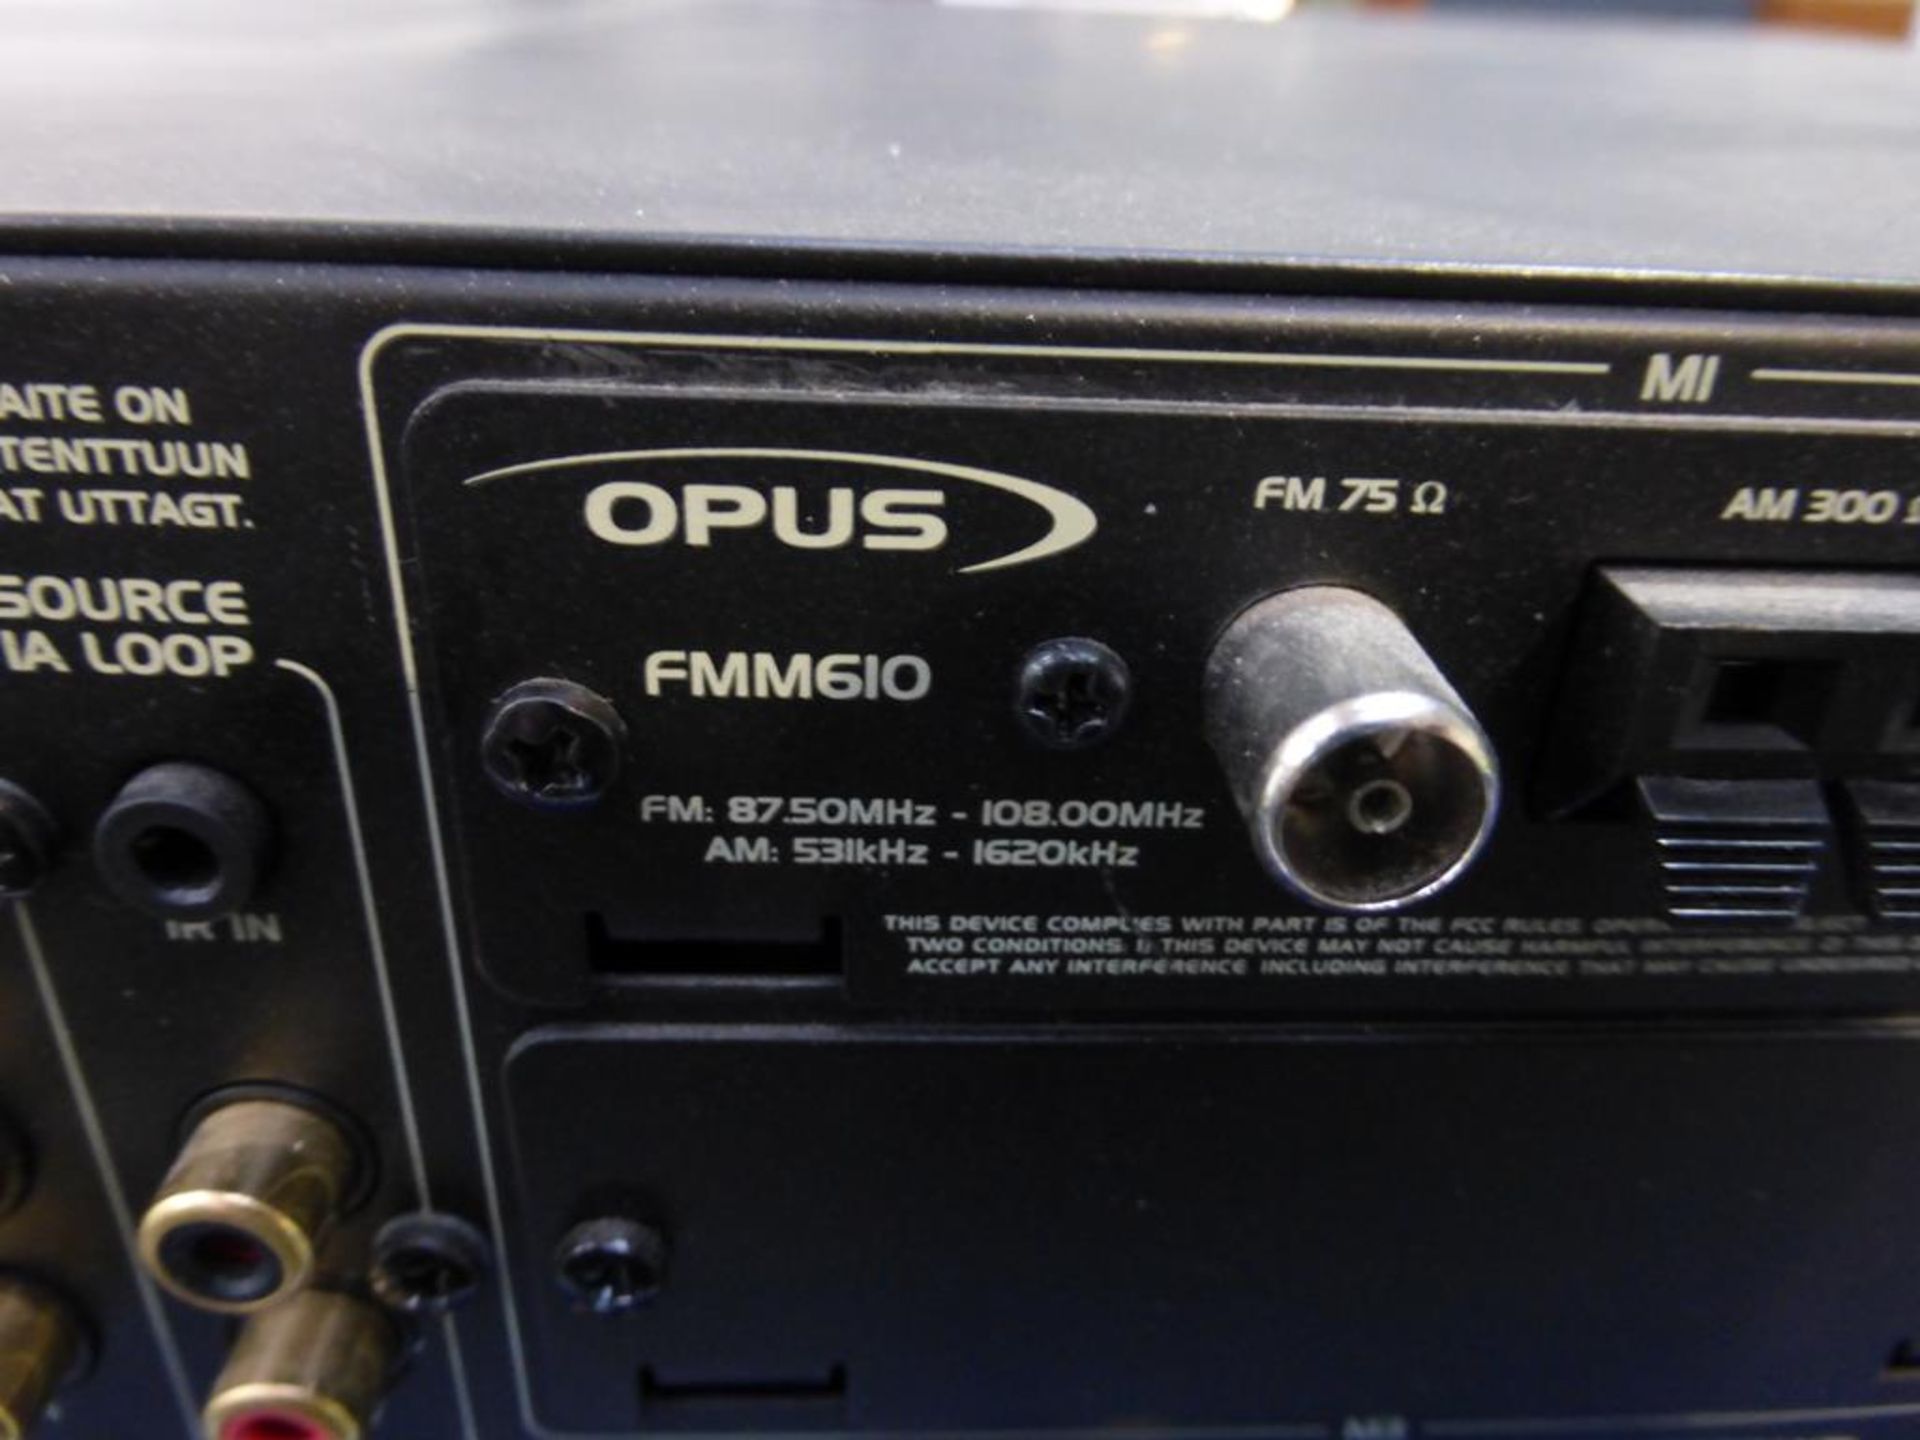 Opus MCU610 - Image 6 of 6